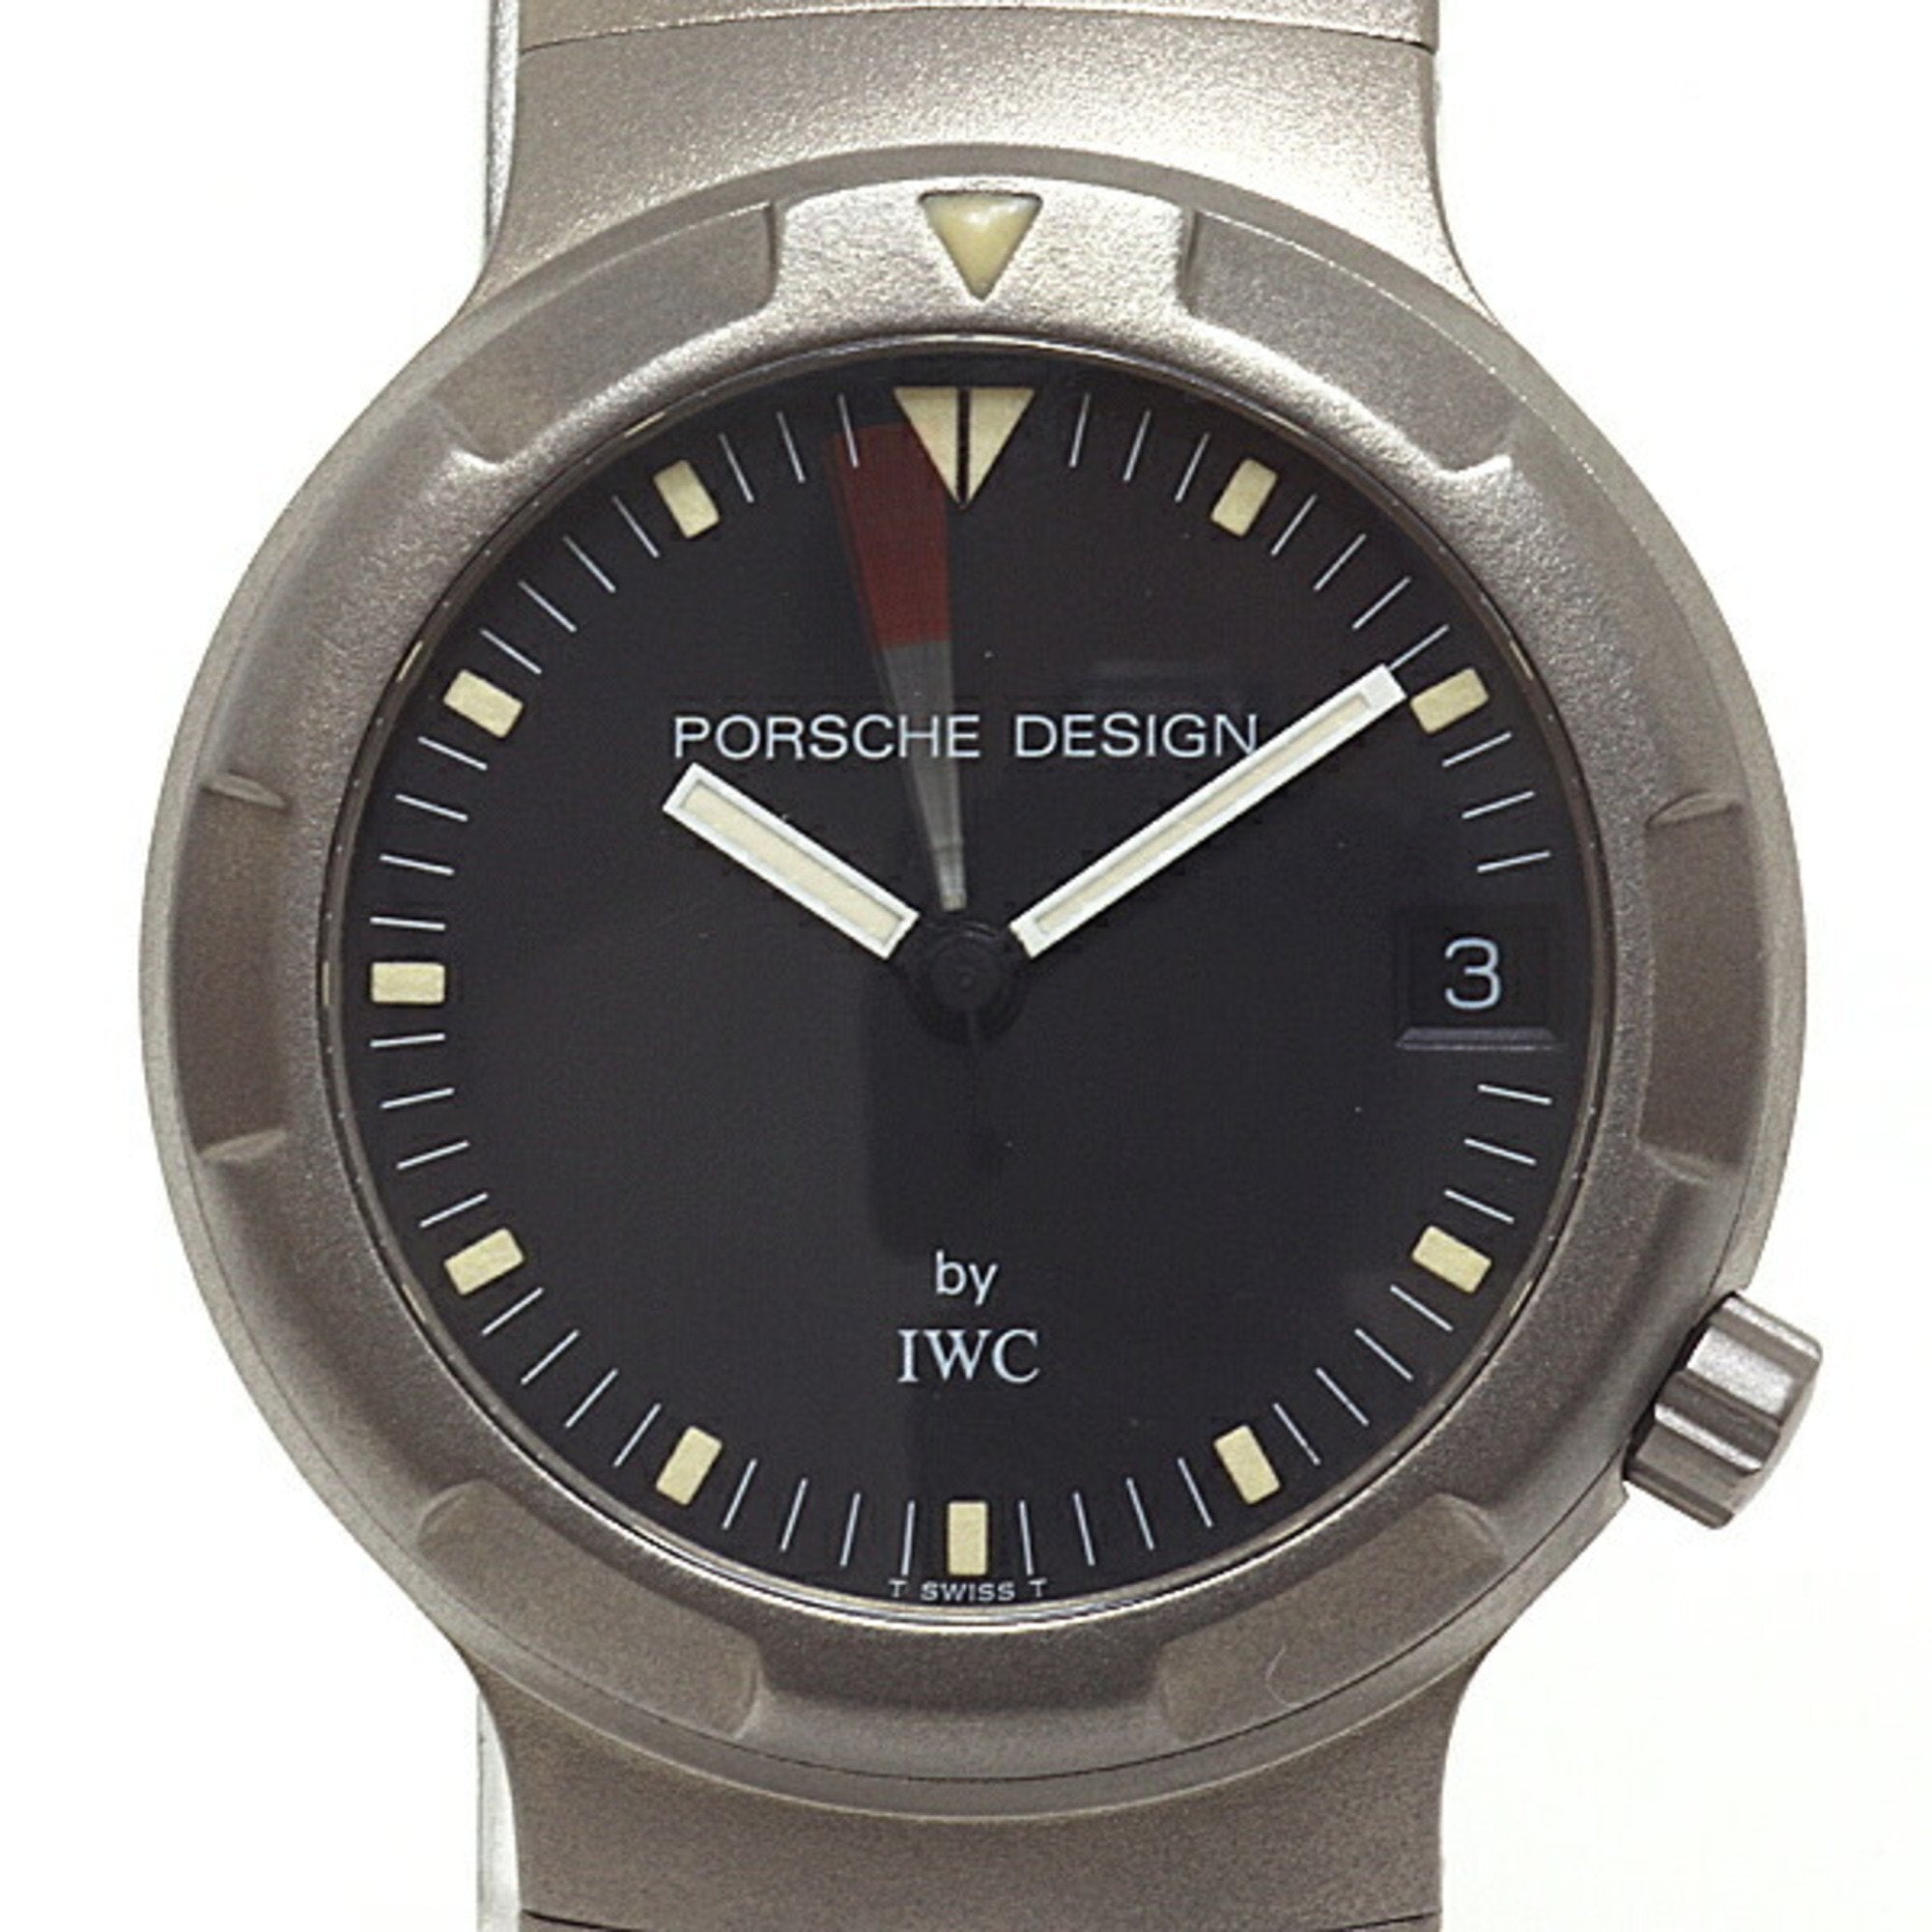 iwc men's watch porsche design ocean 500 3523-001 black dial automatic winding, black